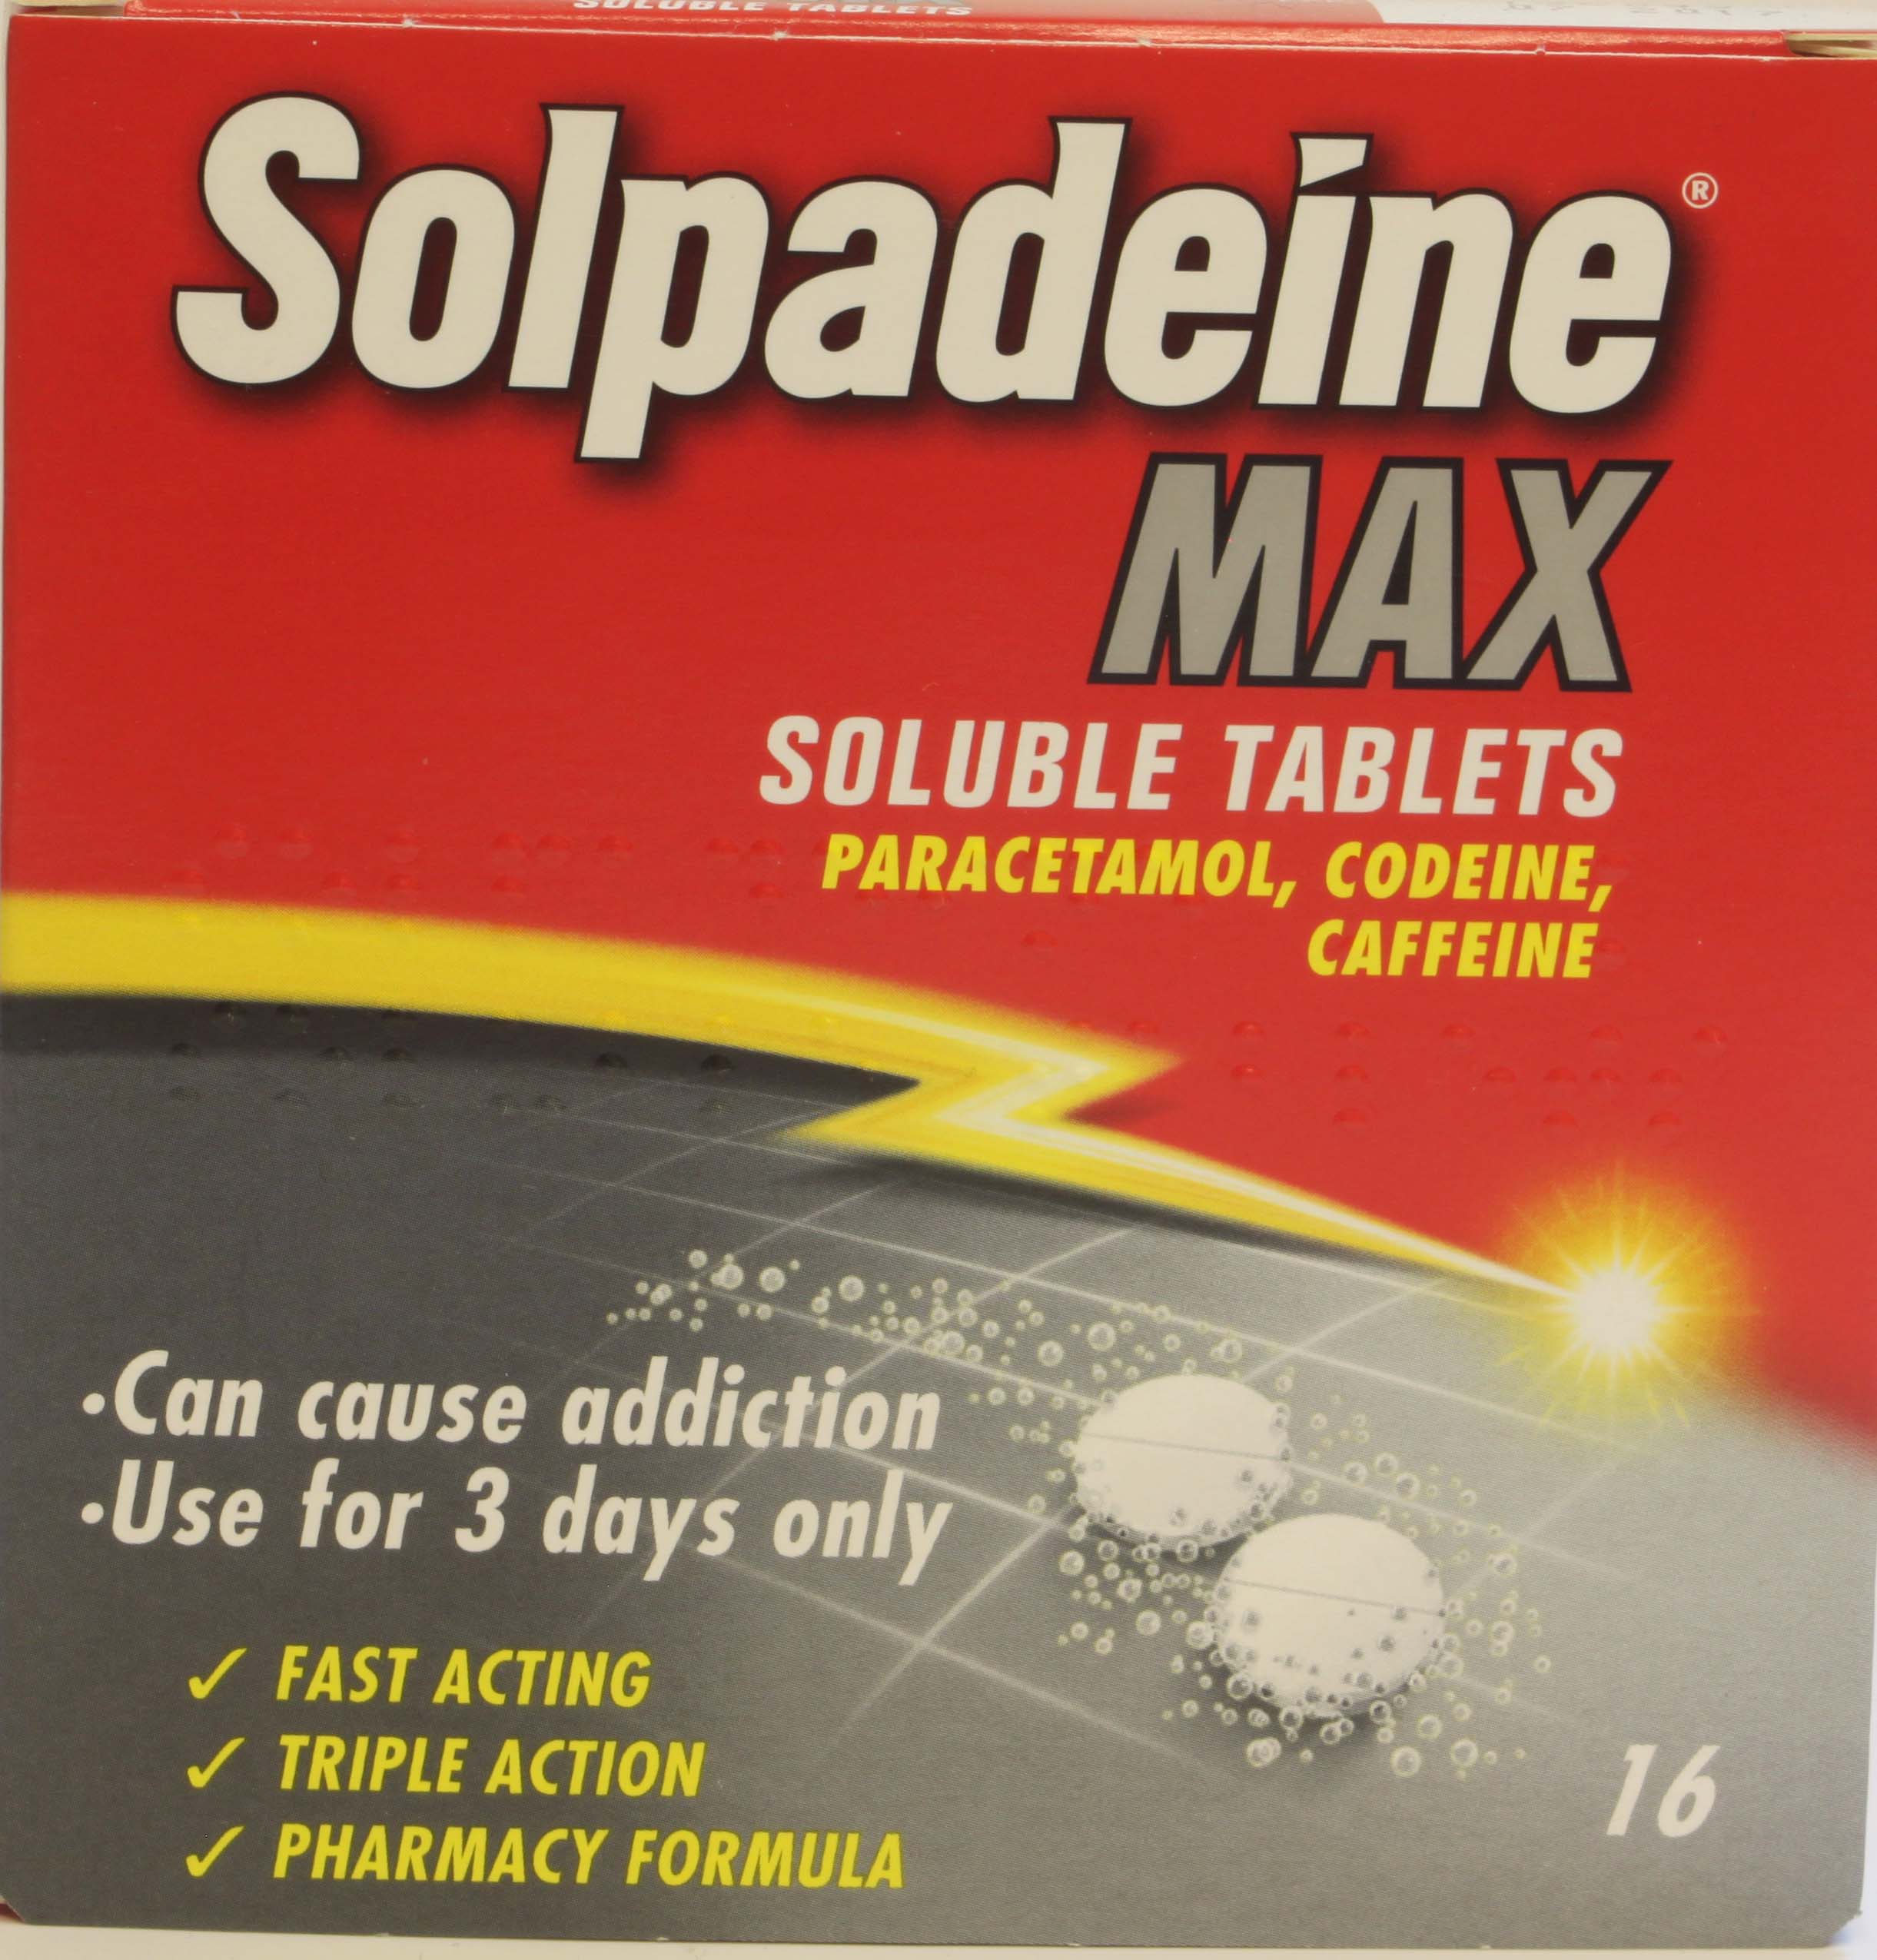 Солпадеин фаст таблетки цены